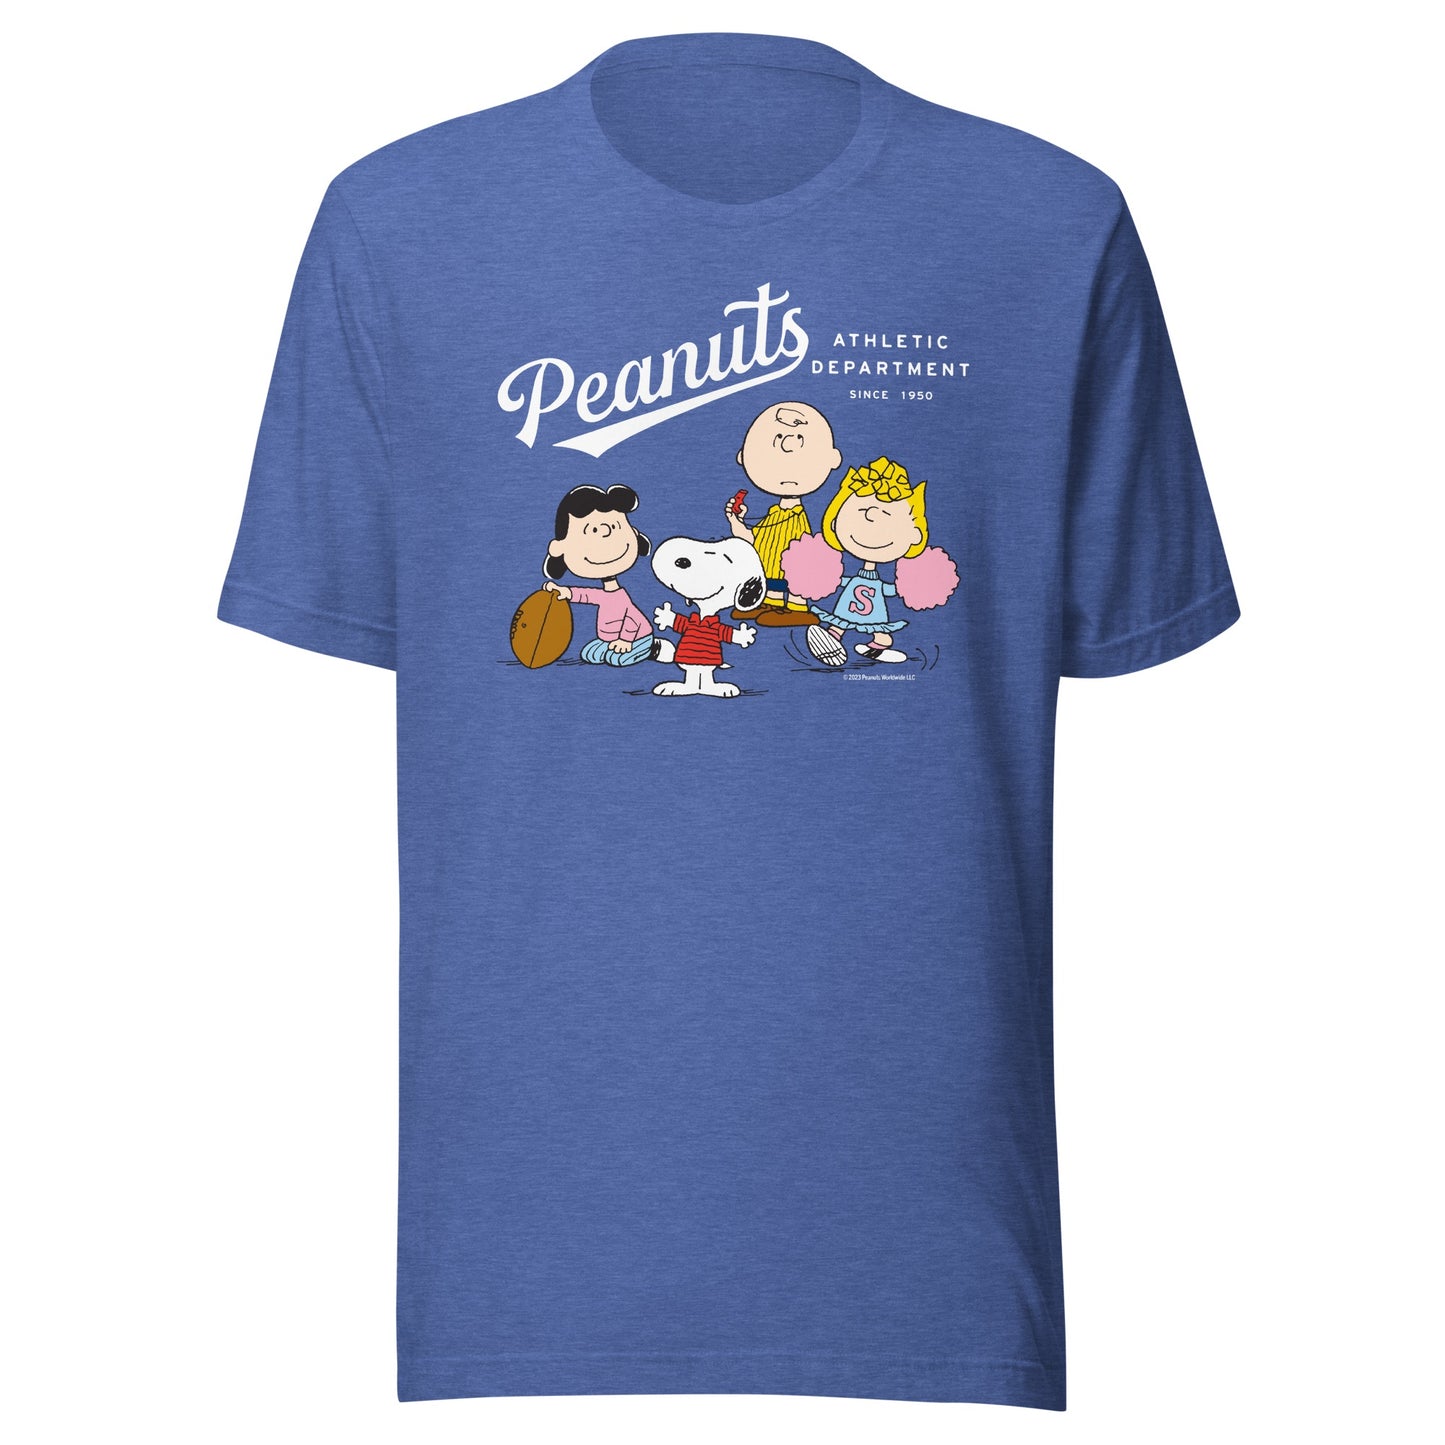 Peanuts Gang Athletic Department Adult T-Shirt